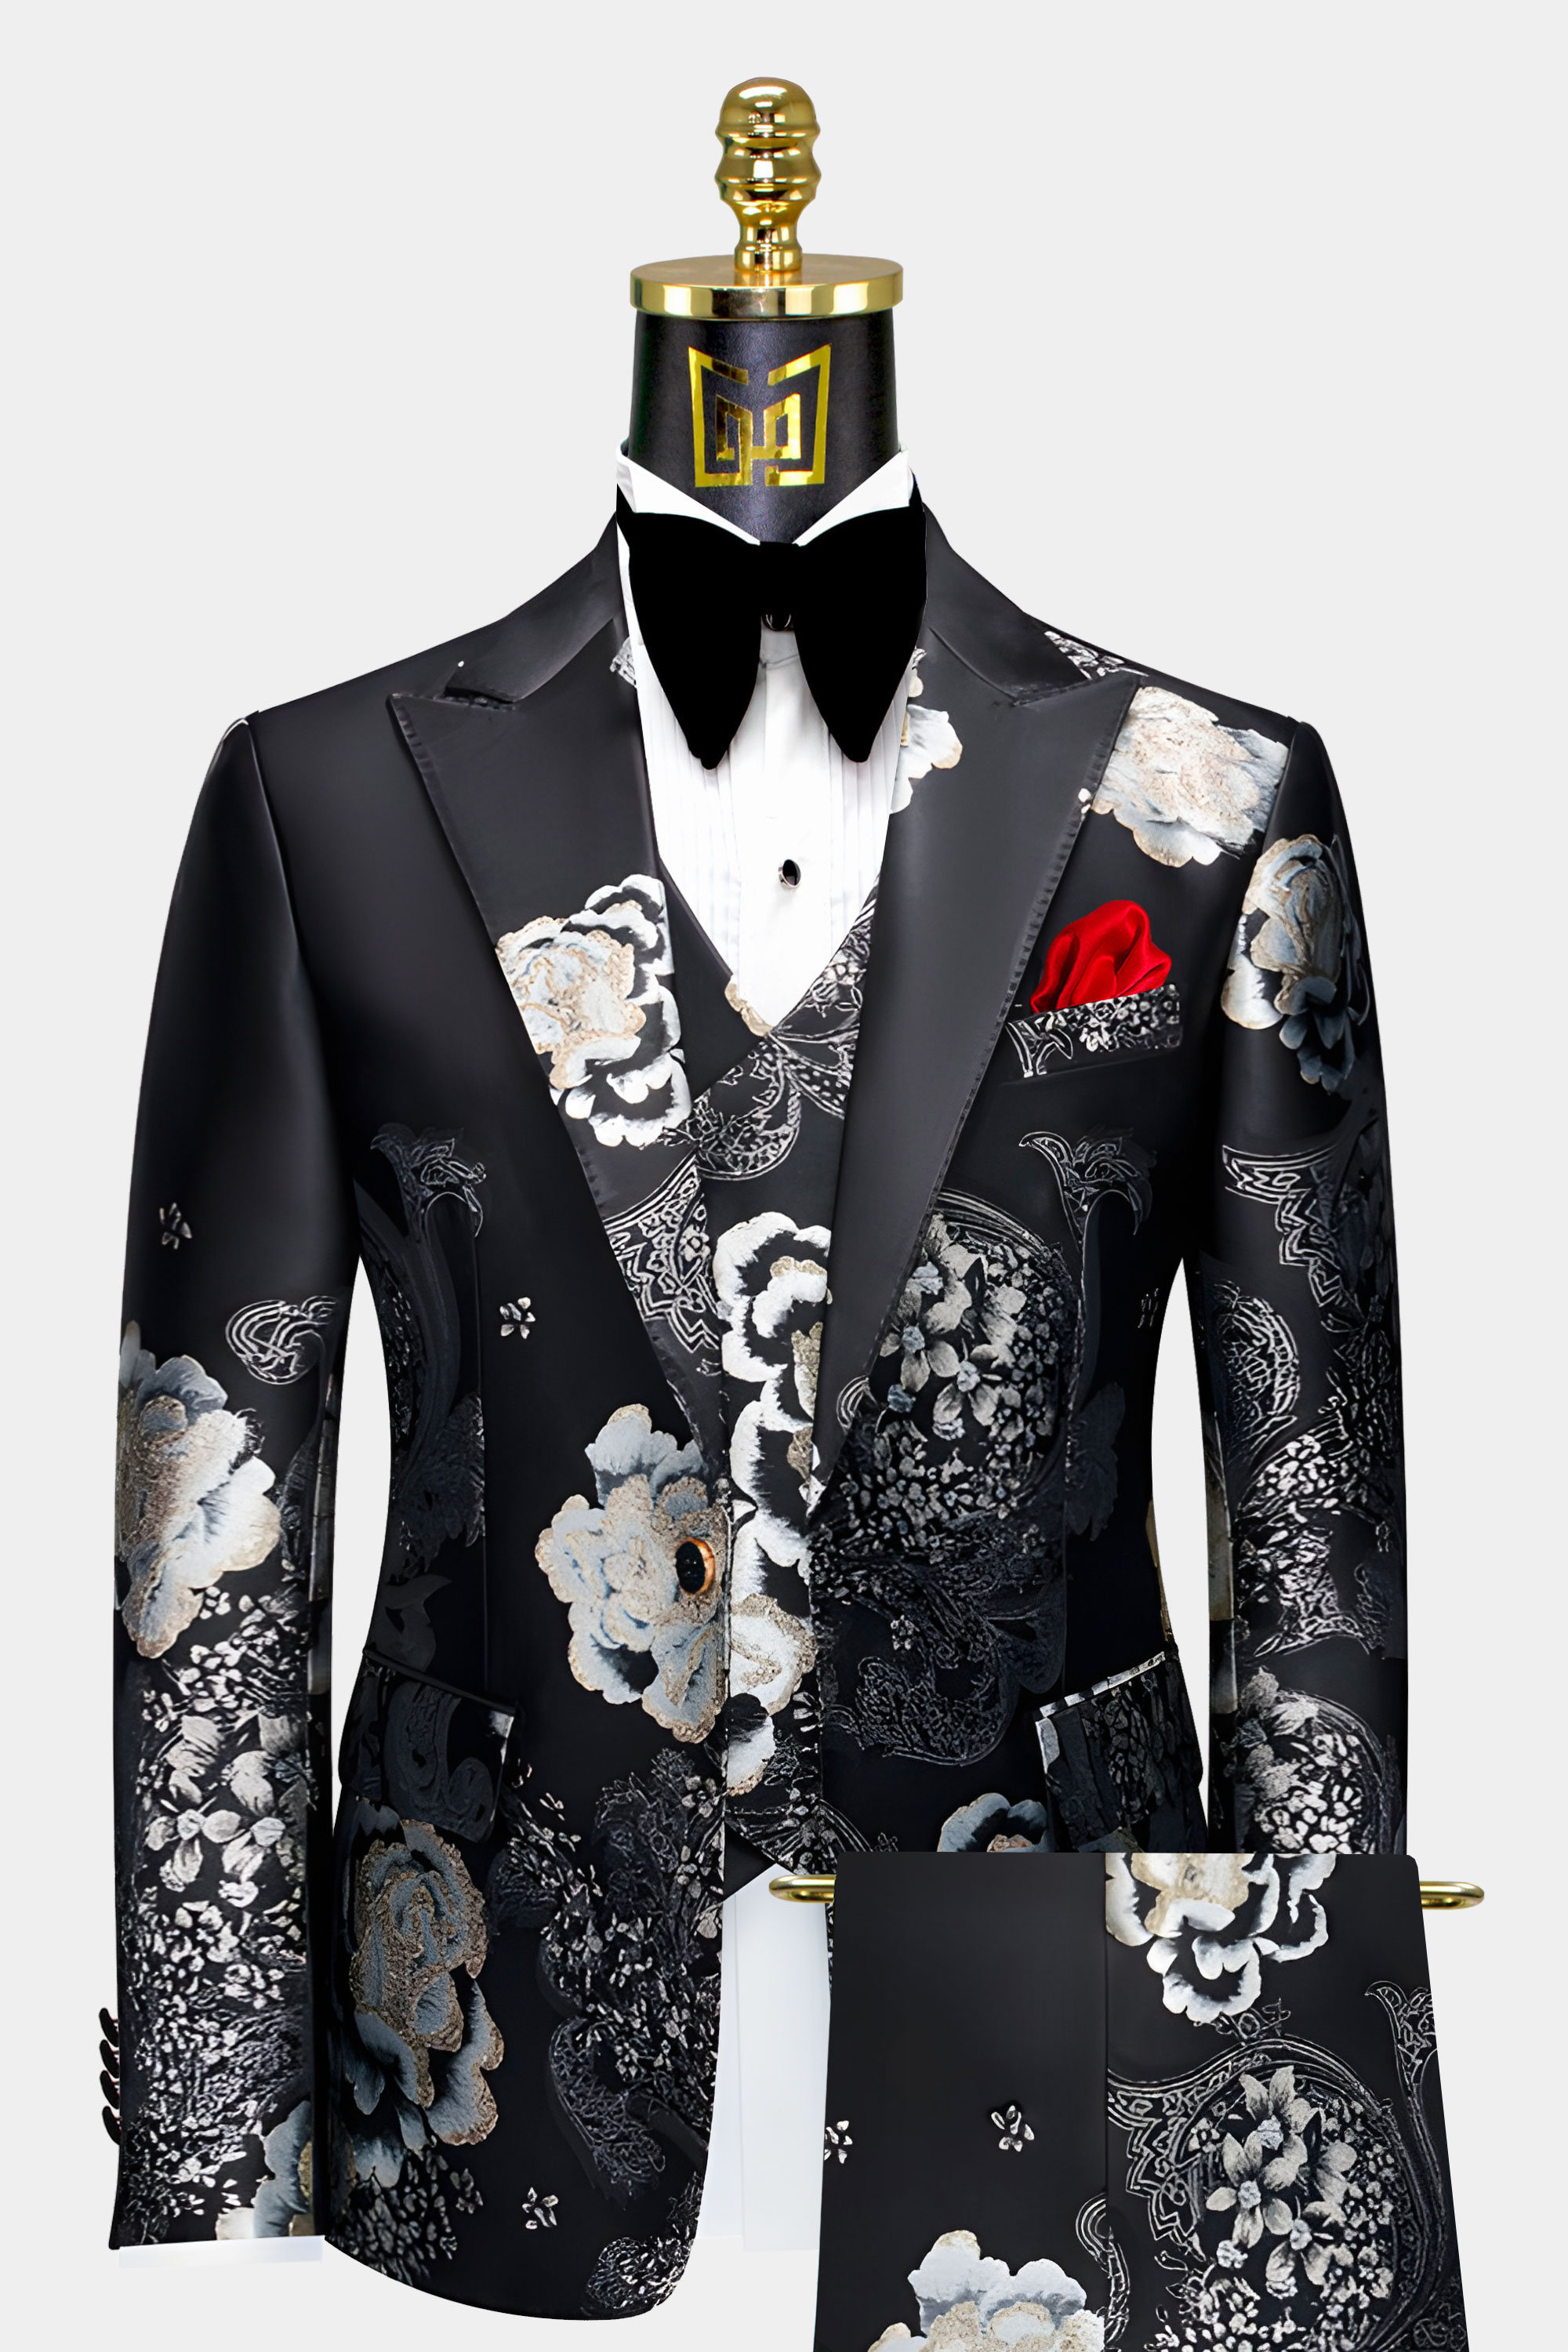 Black and Silver Suit | Gentleman's Guru